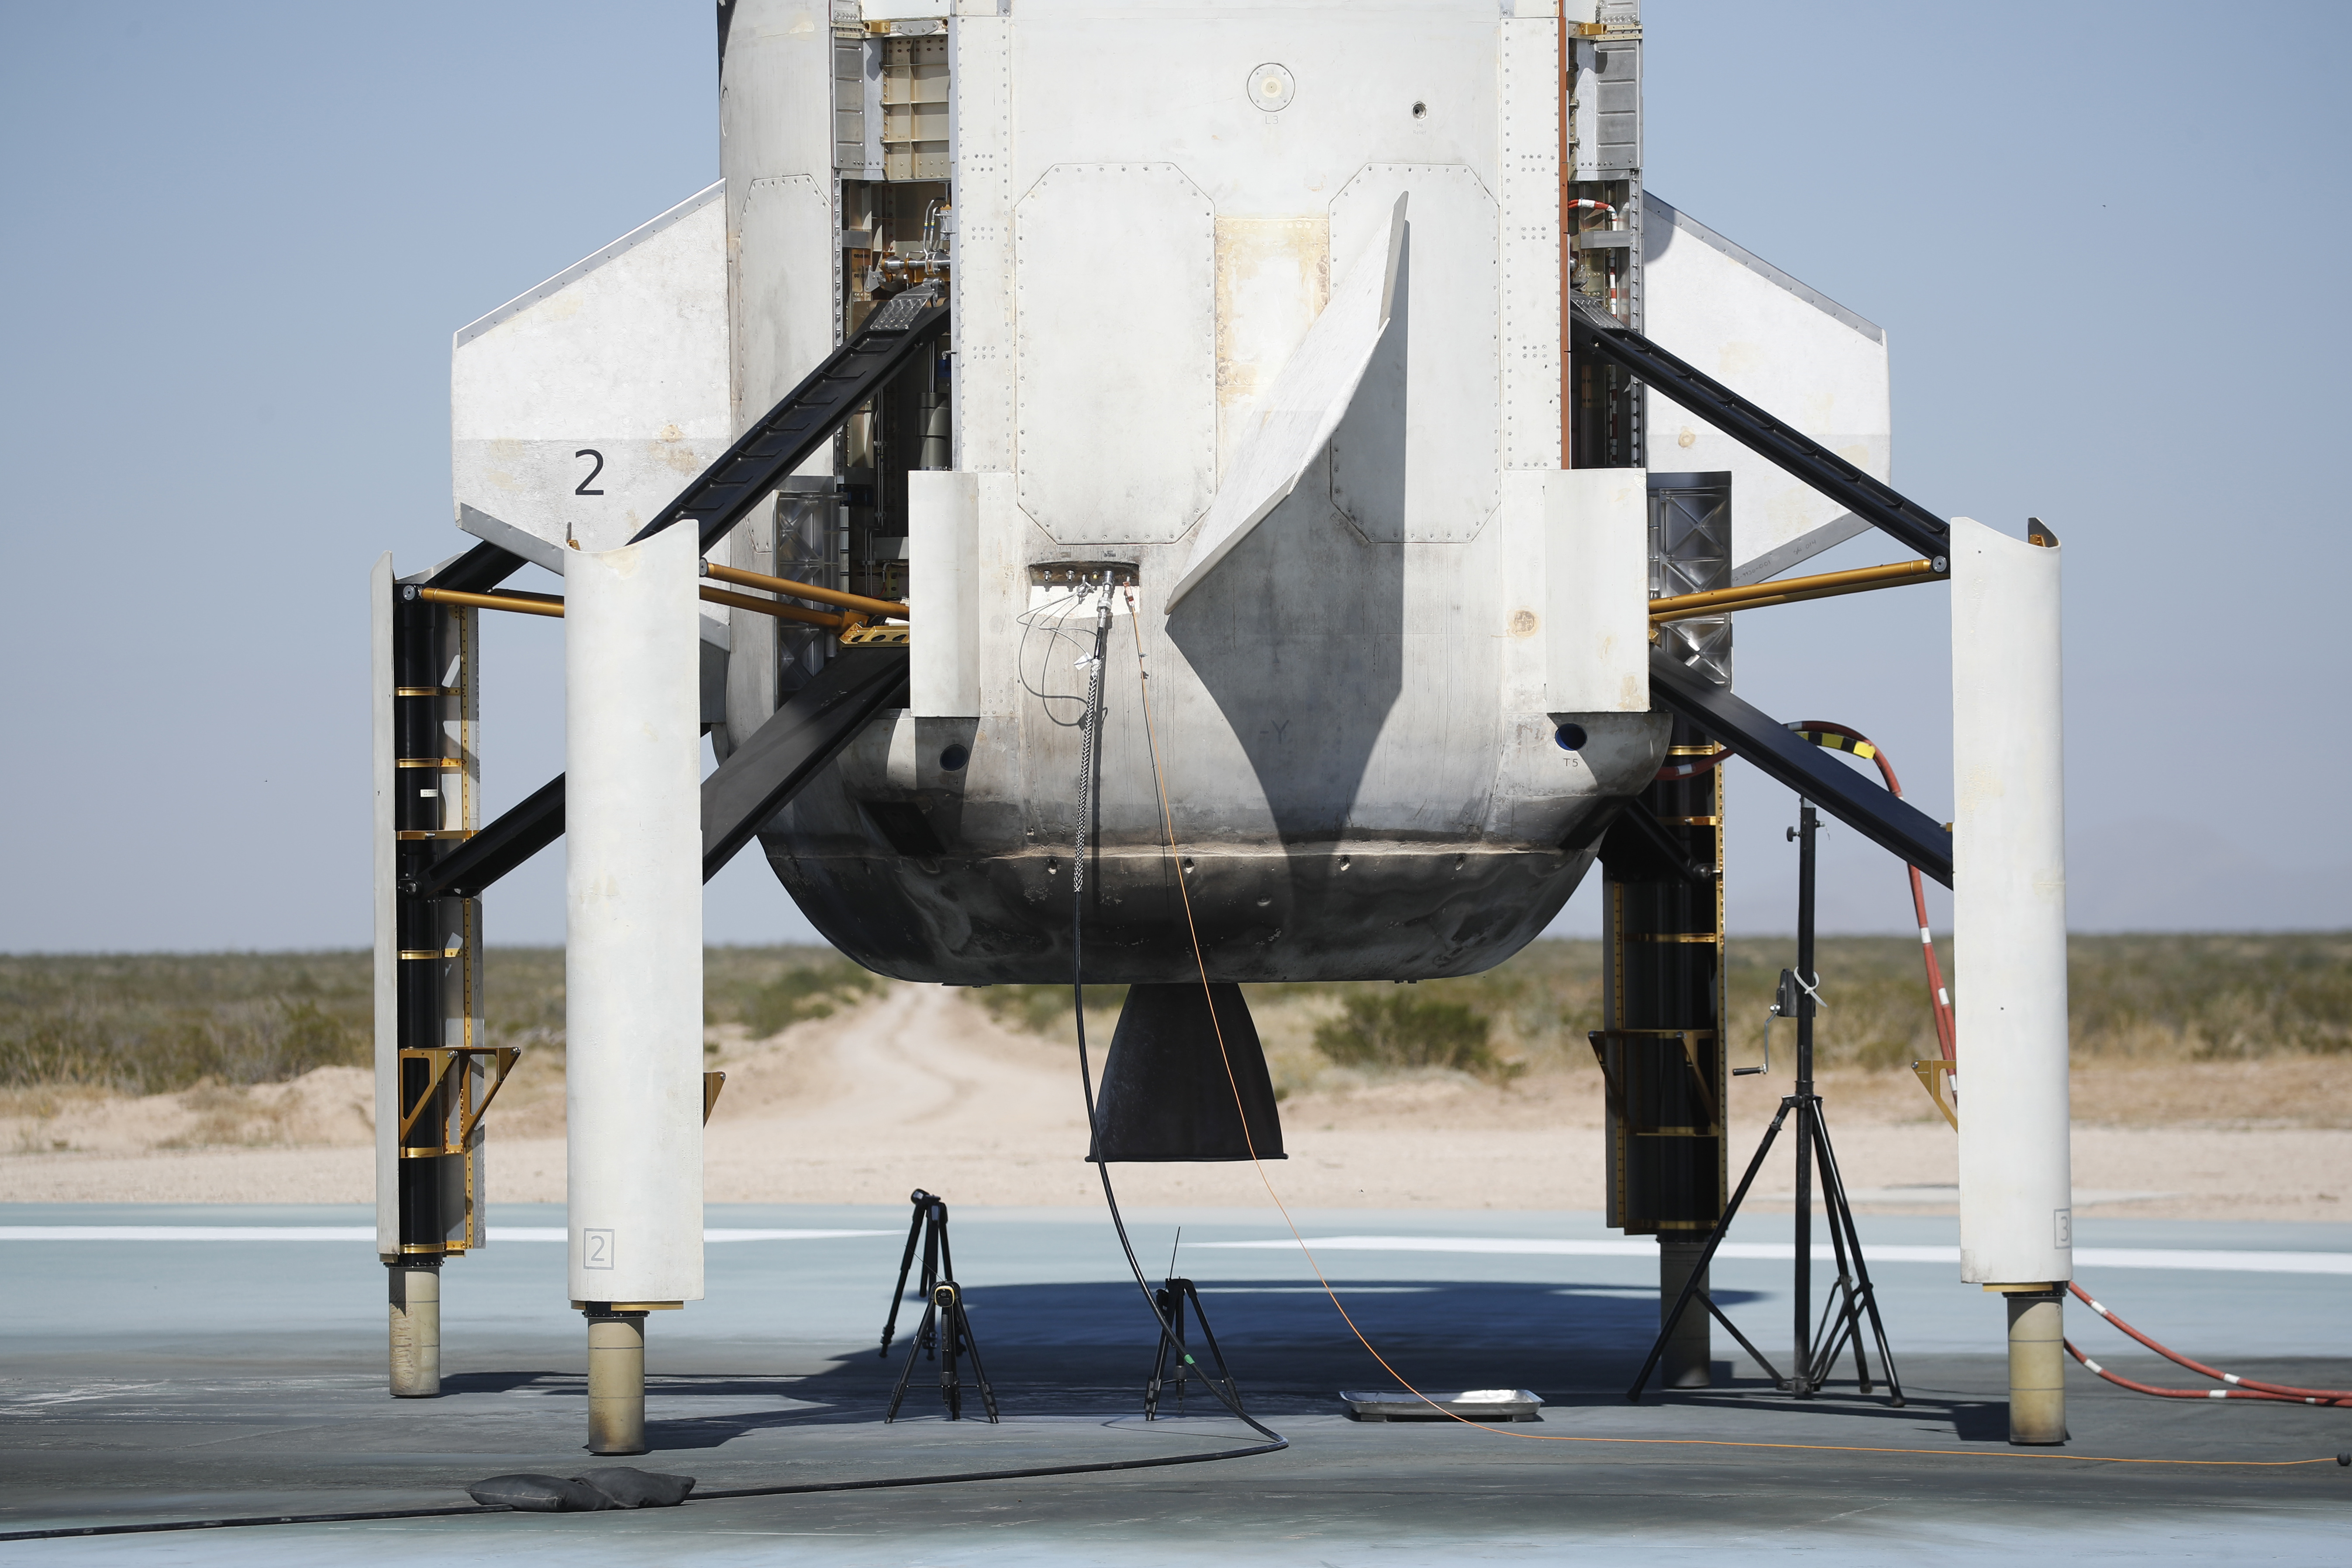 Blue Origin's reusable rocket engine New Shepard is seen on a landing pad after flight